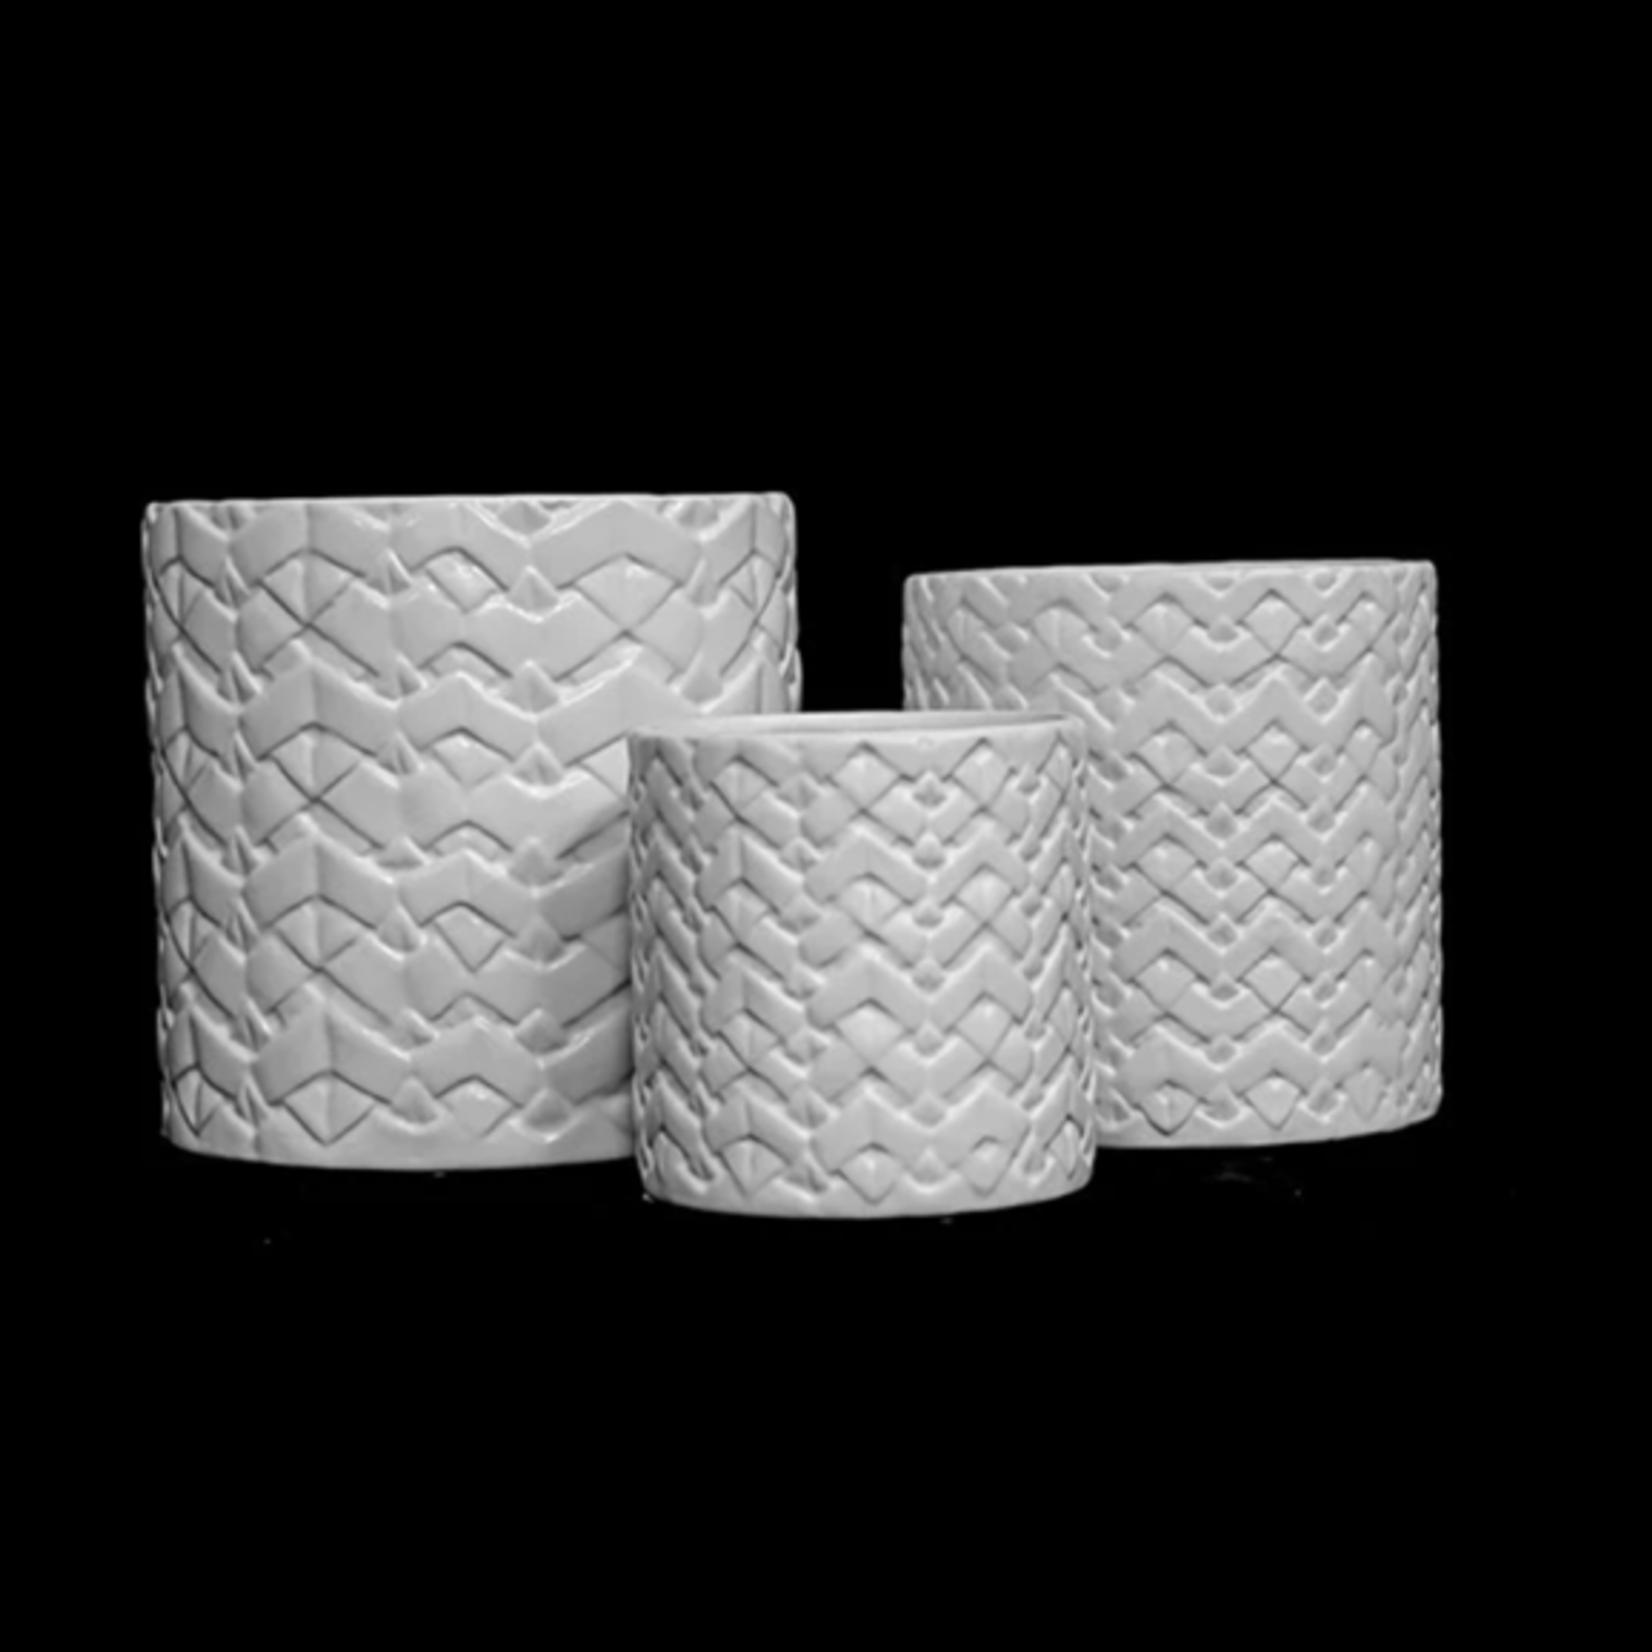 7.5” X 8” LARGE Matte Ceramic Round Pot with Overlay Chevron Weave Pattern Design Body